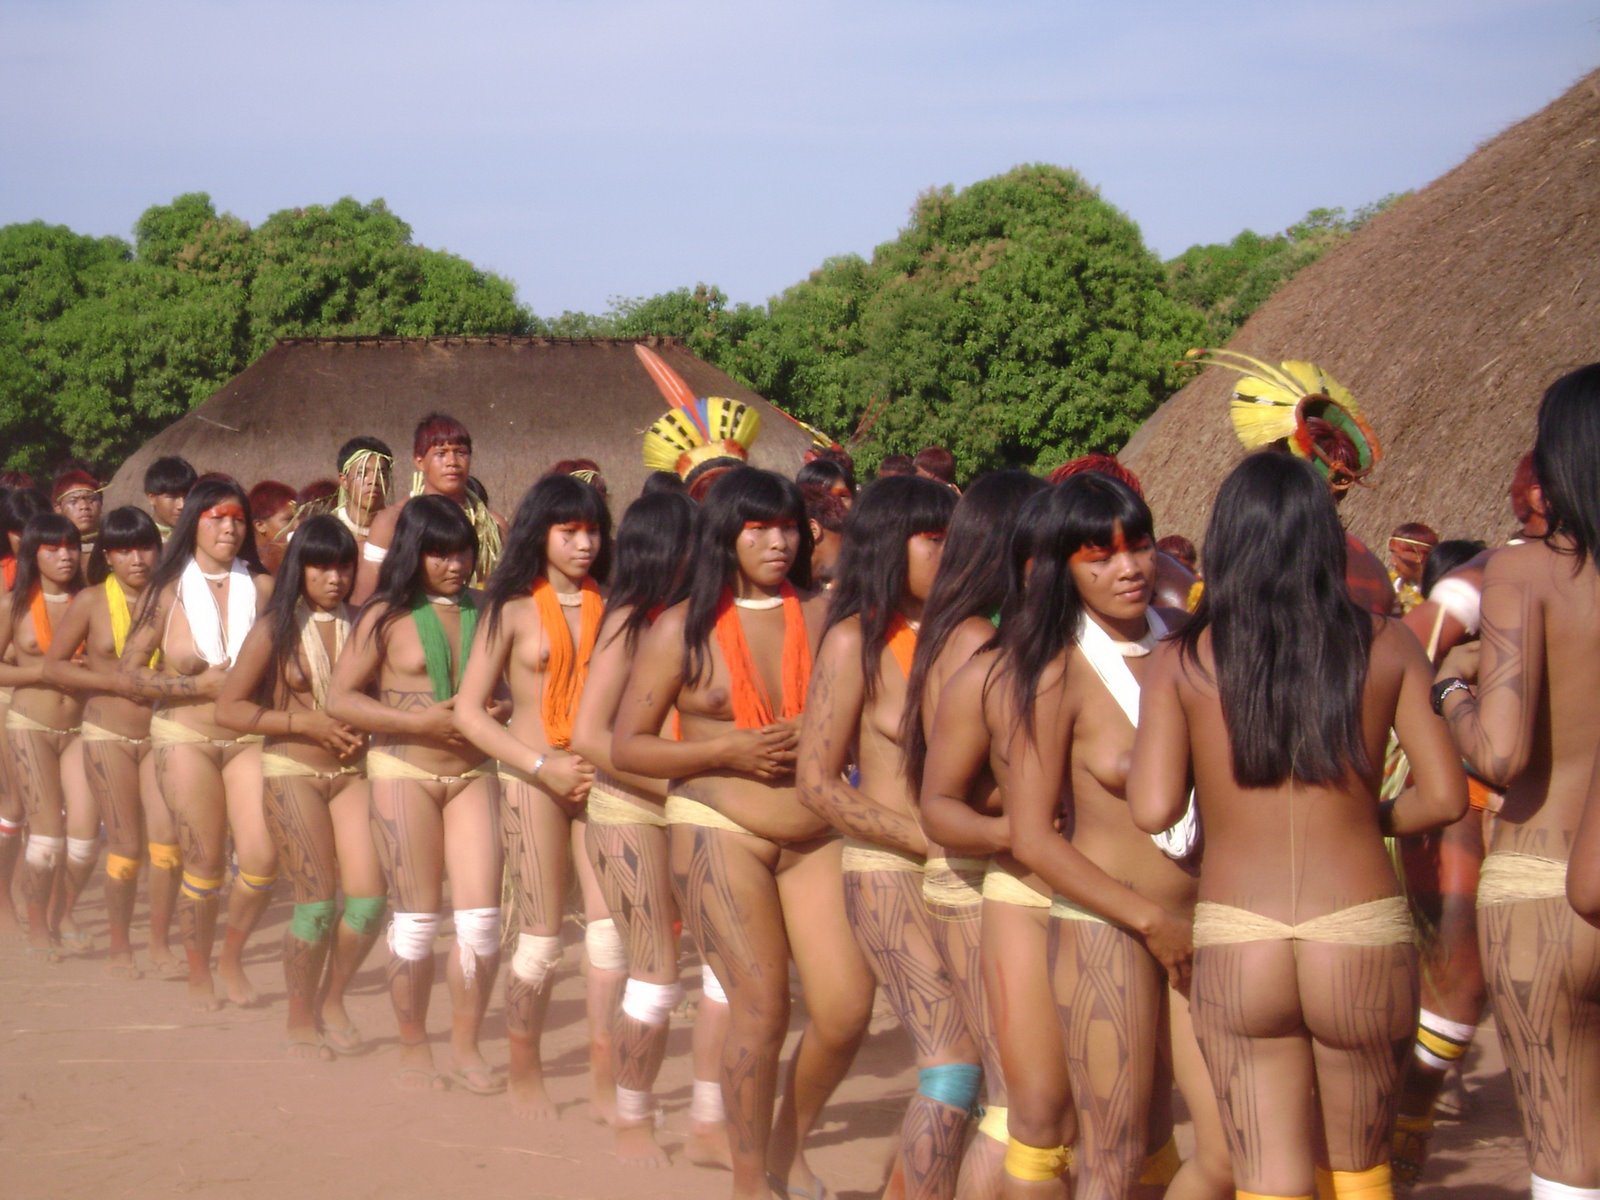 Африка племена девочки порно - порно видео смотреть онлайн на автонагаз55.рф